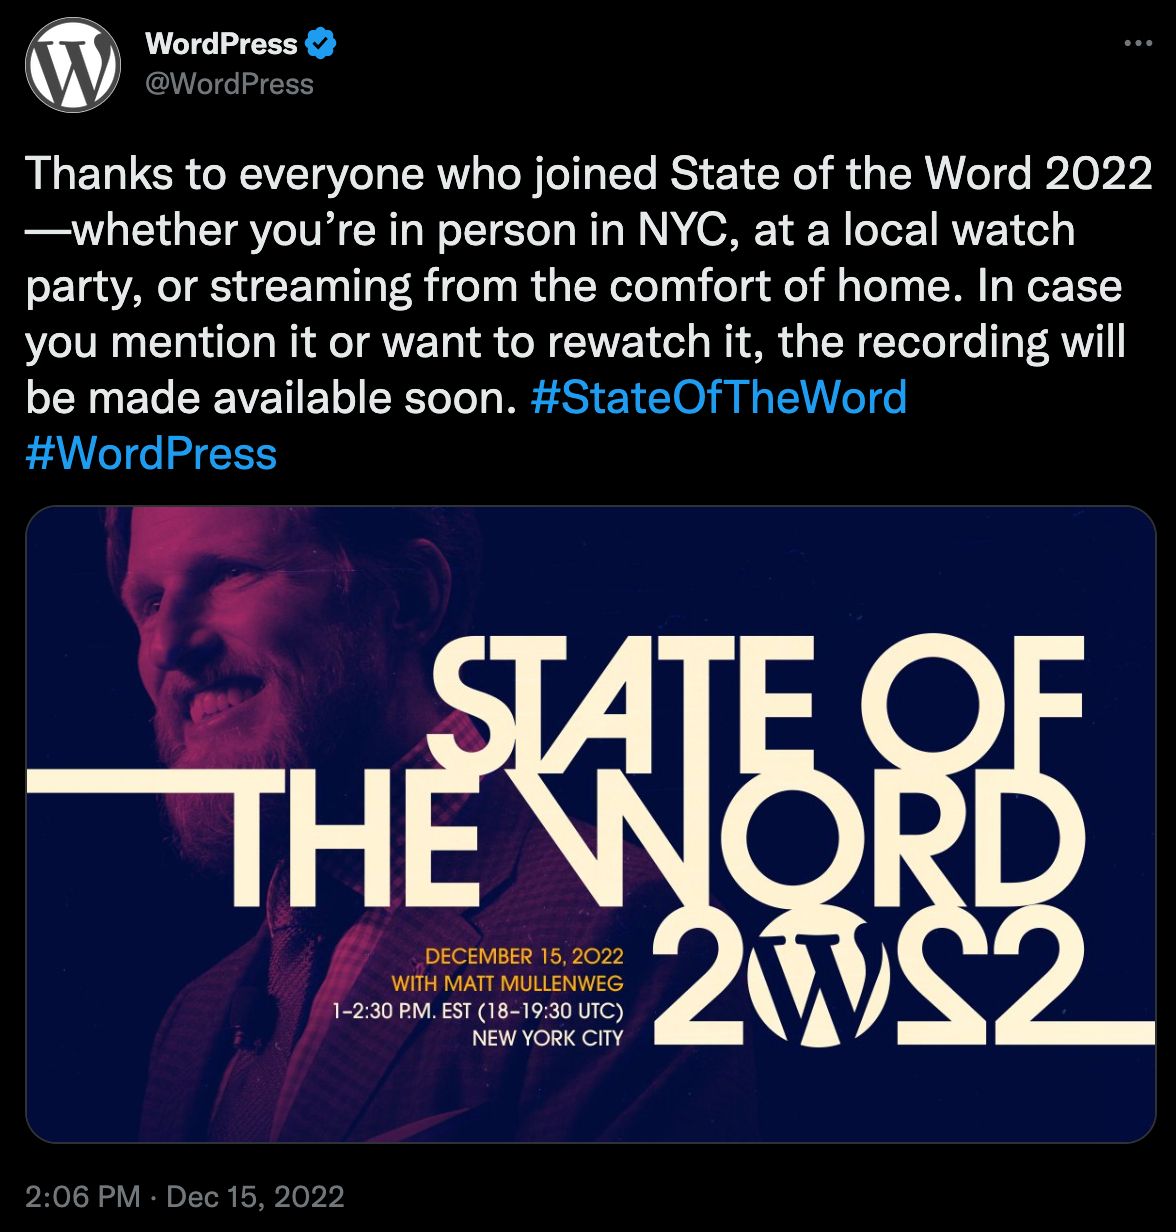 State of the Word tweet